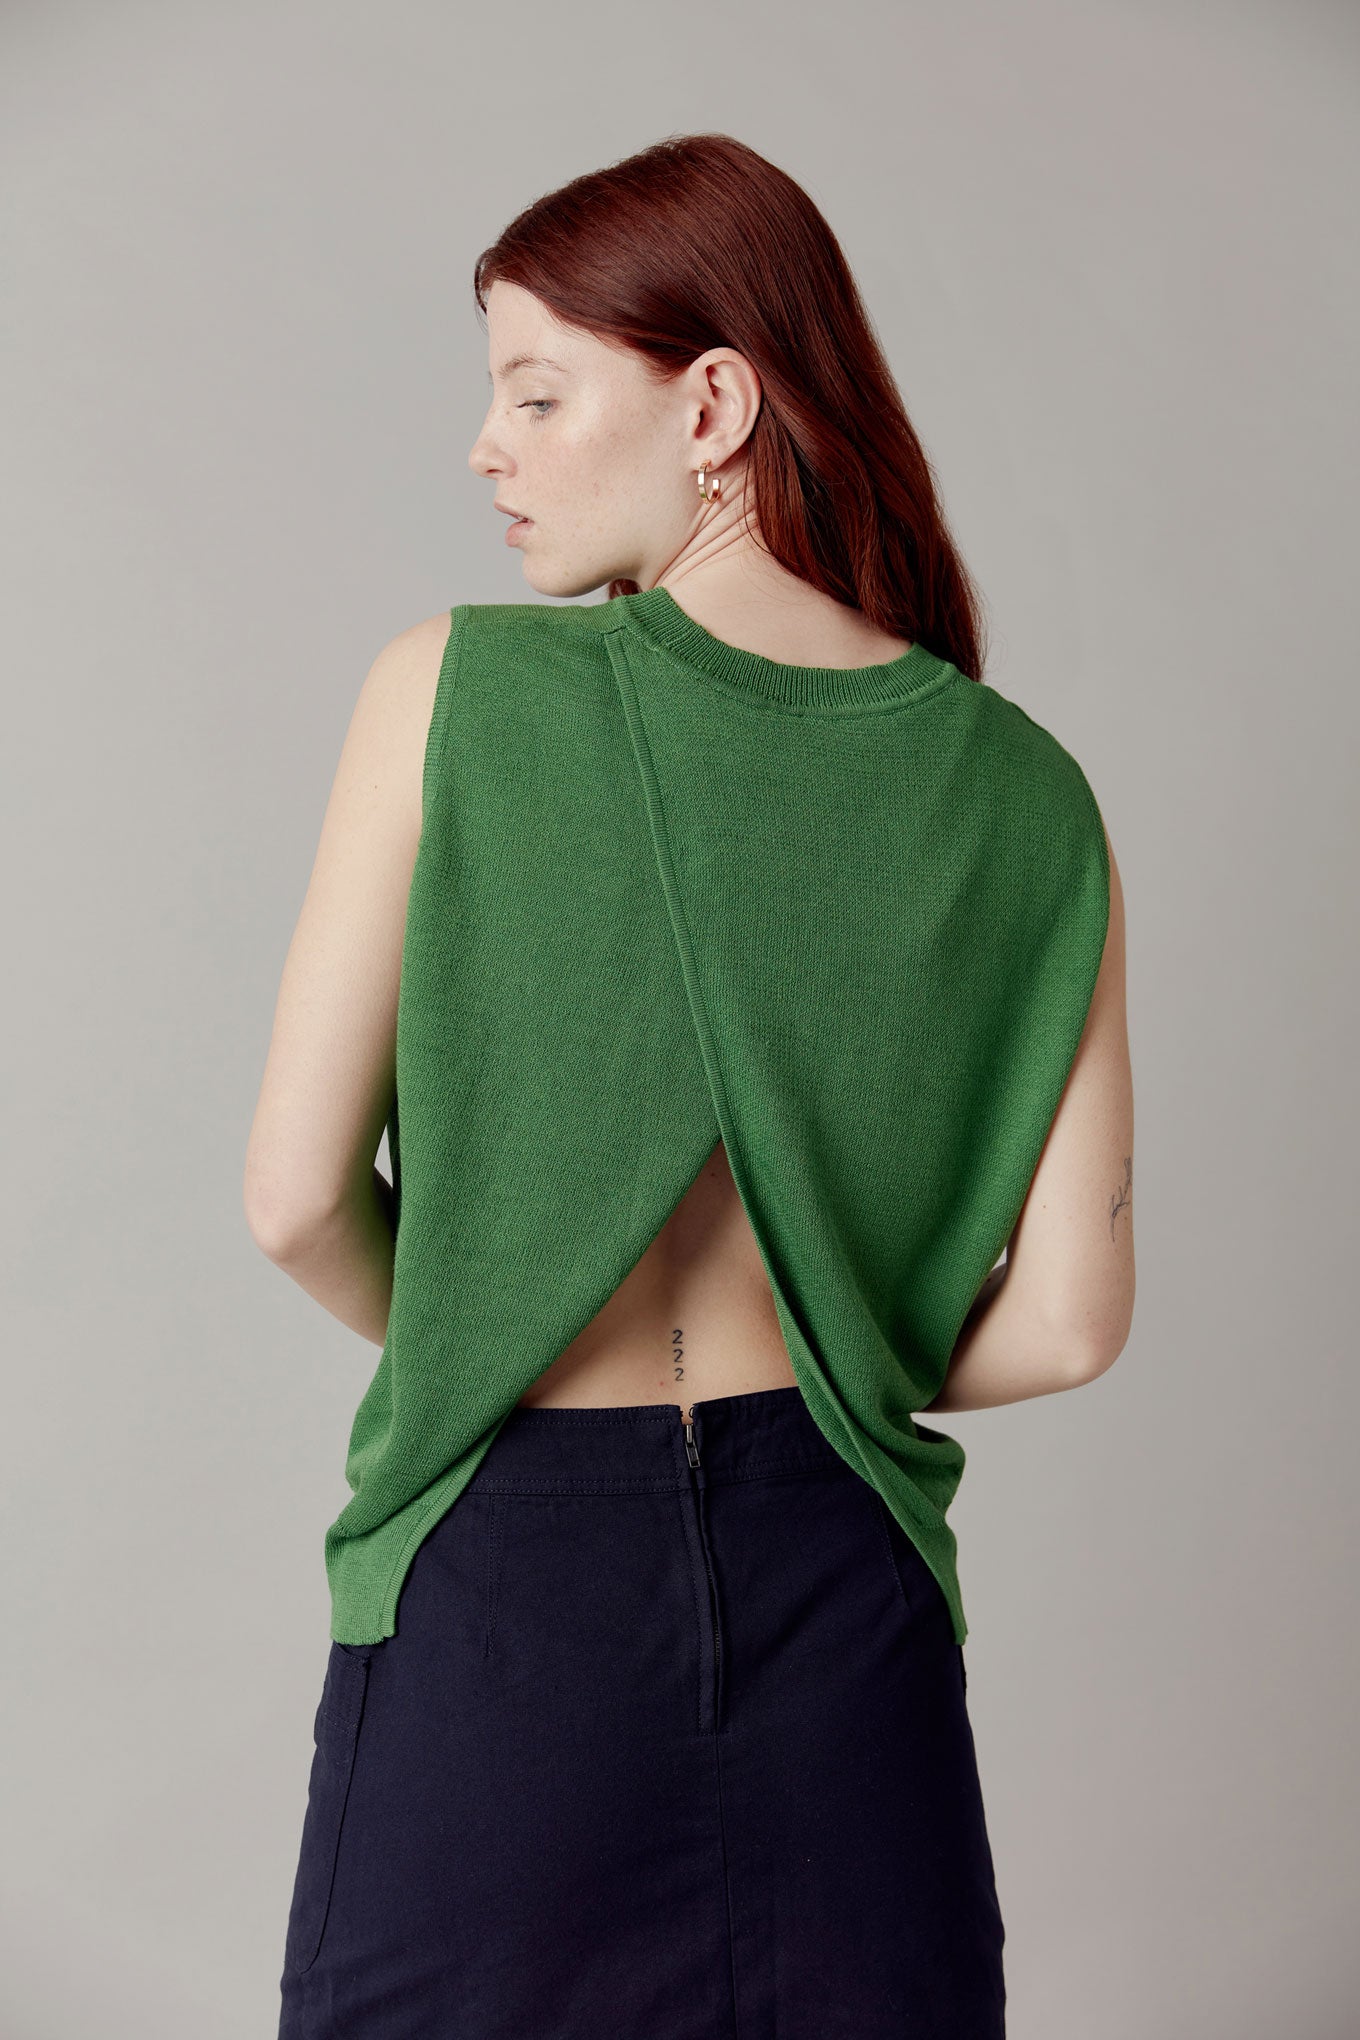 MILA Organic Cotton Vest - Summer Green, SIZE 2 / UK 10 / EUR 38